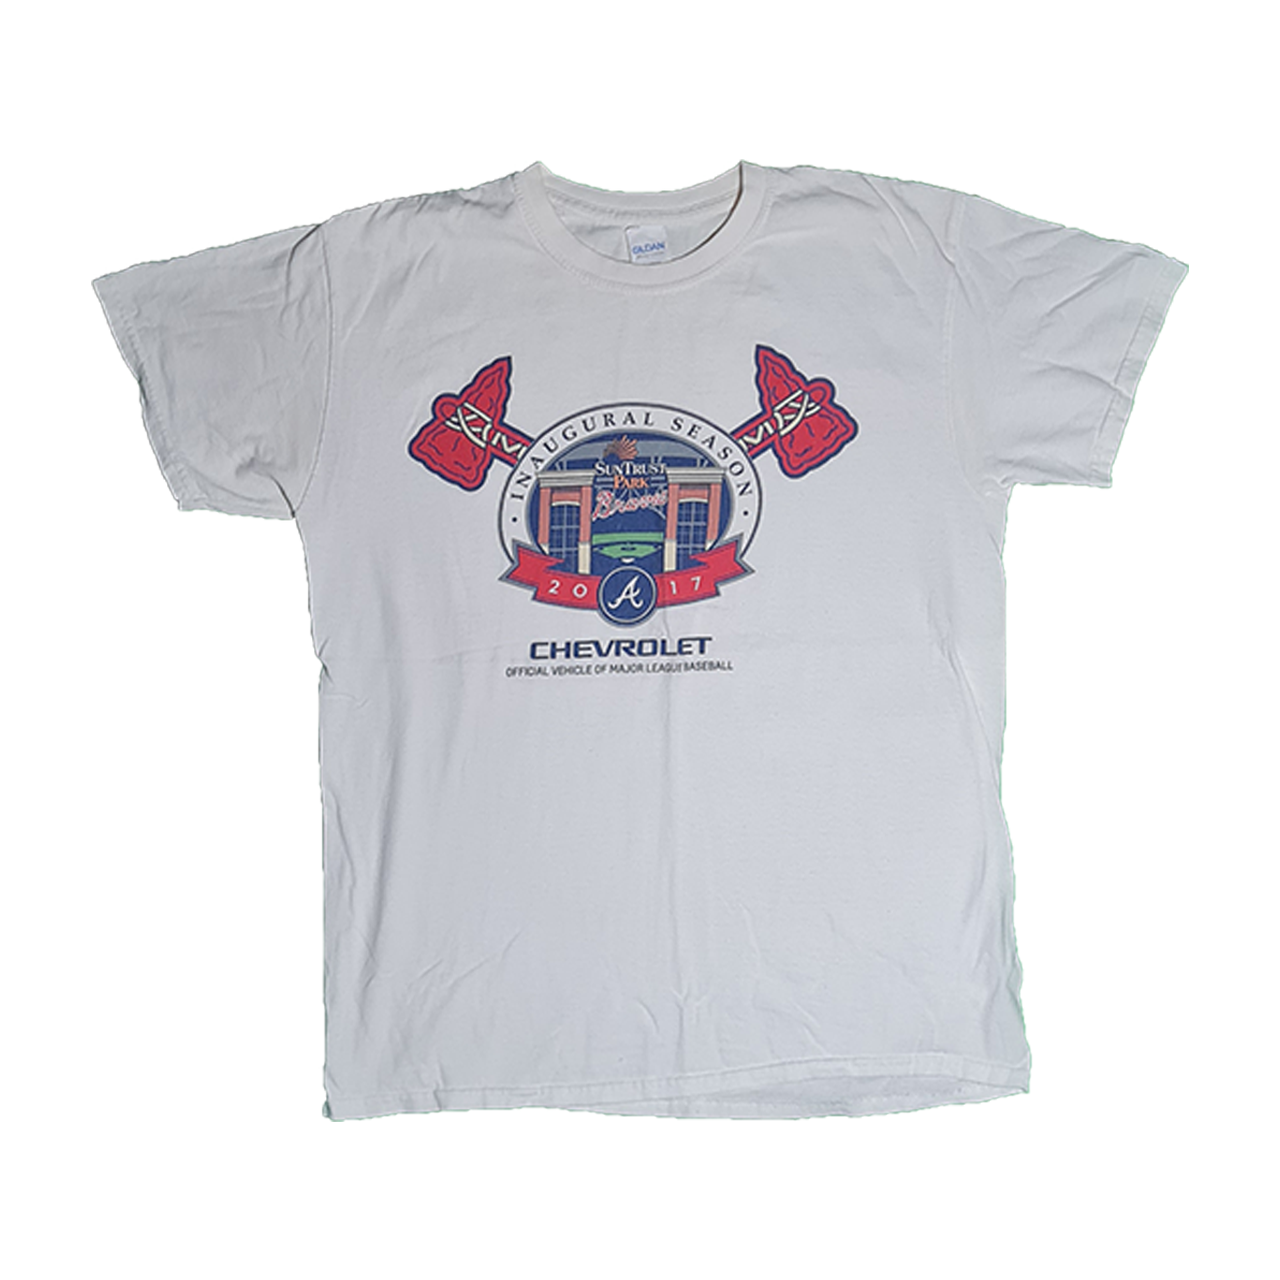 Atlanta Braves Truist park Major league baseball logo shirt